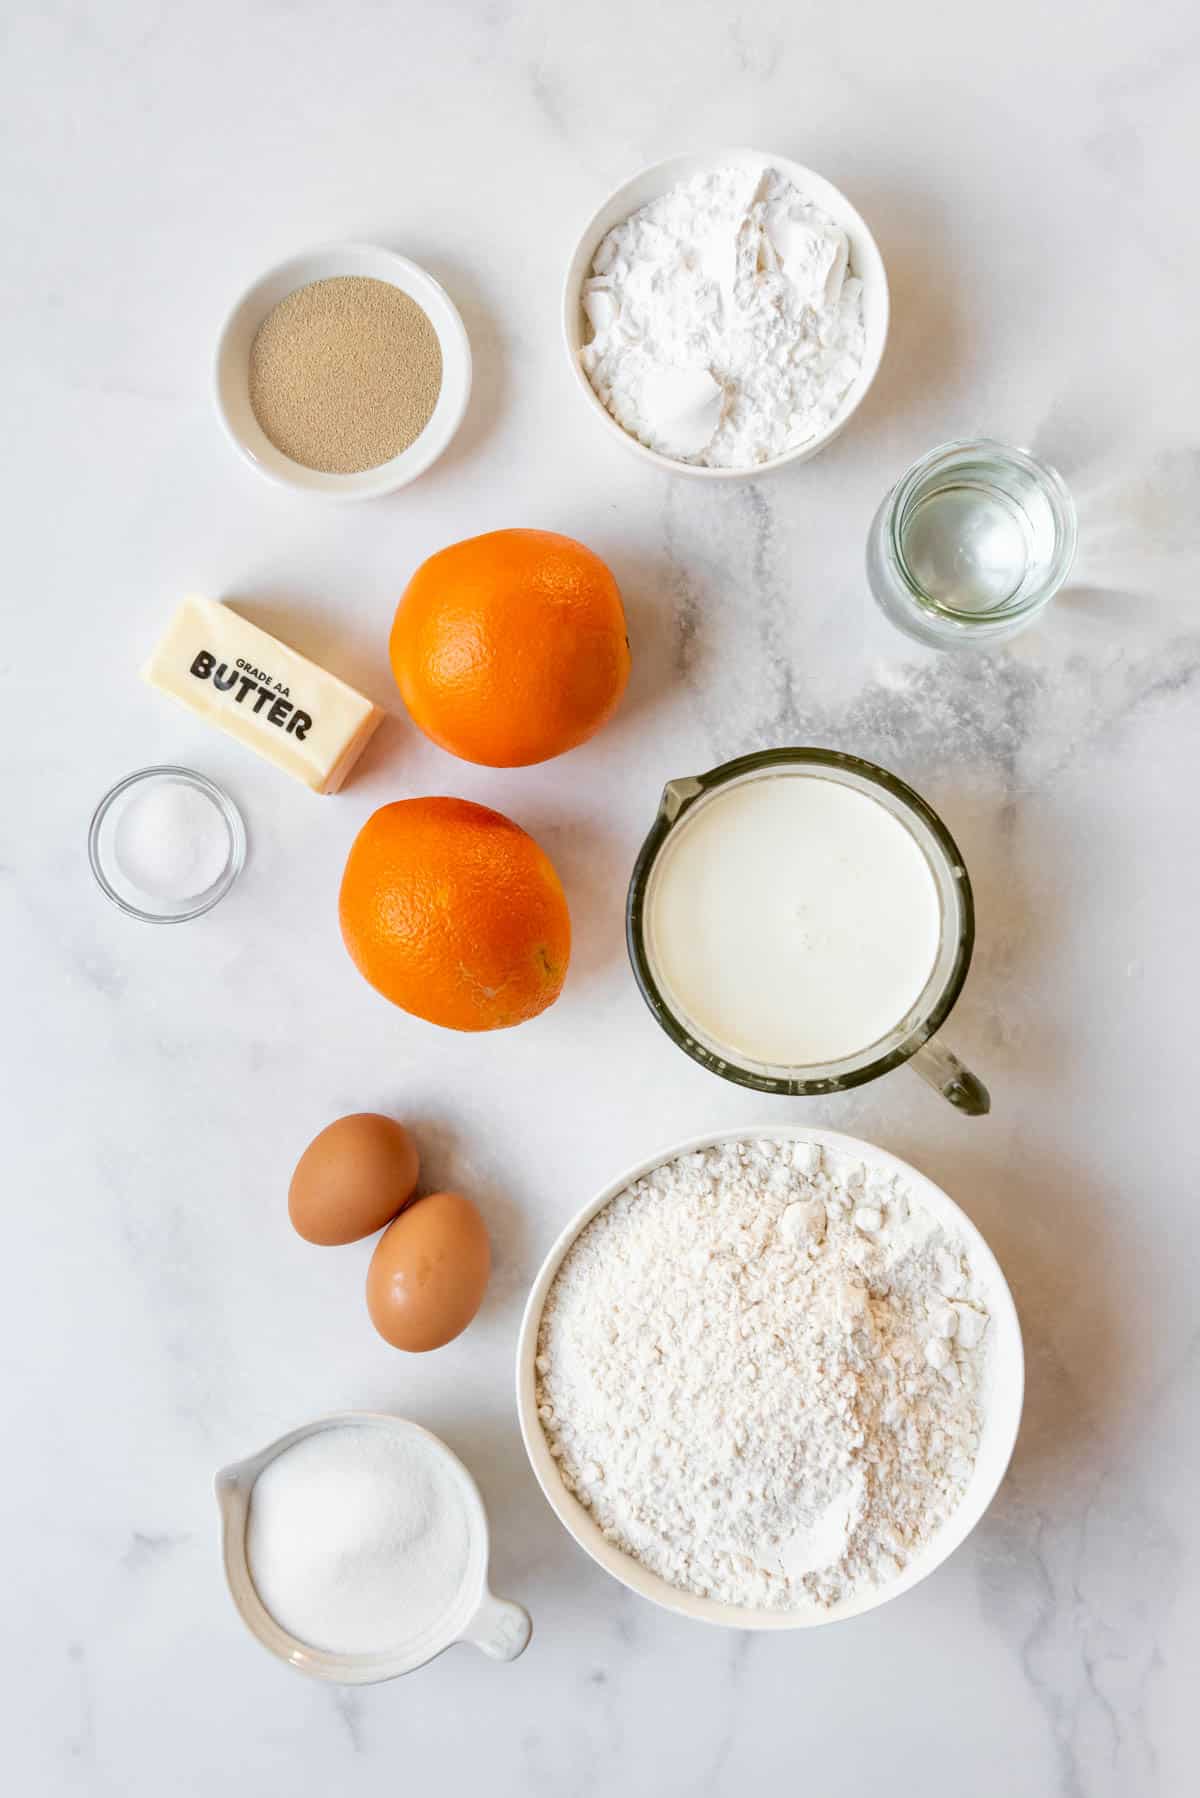 Ingredients for making homemade orange sweet rolls.